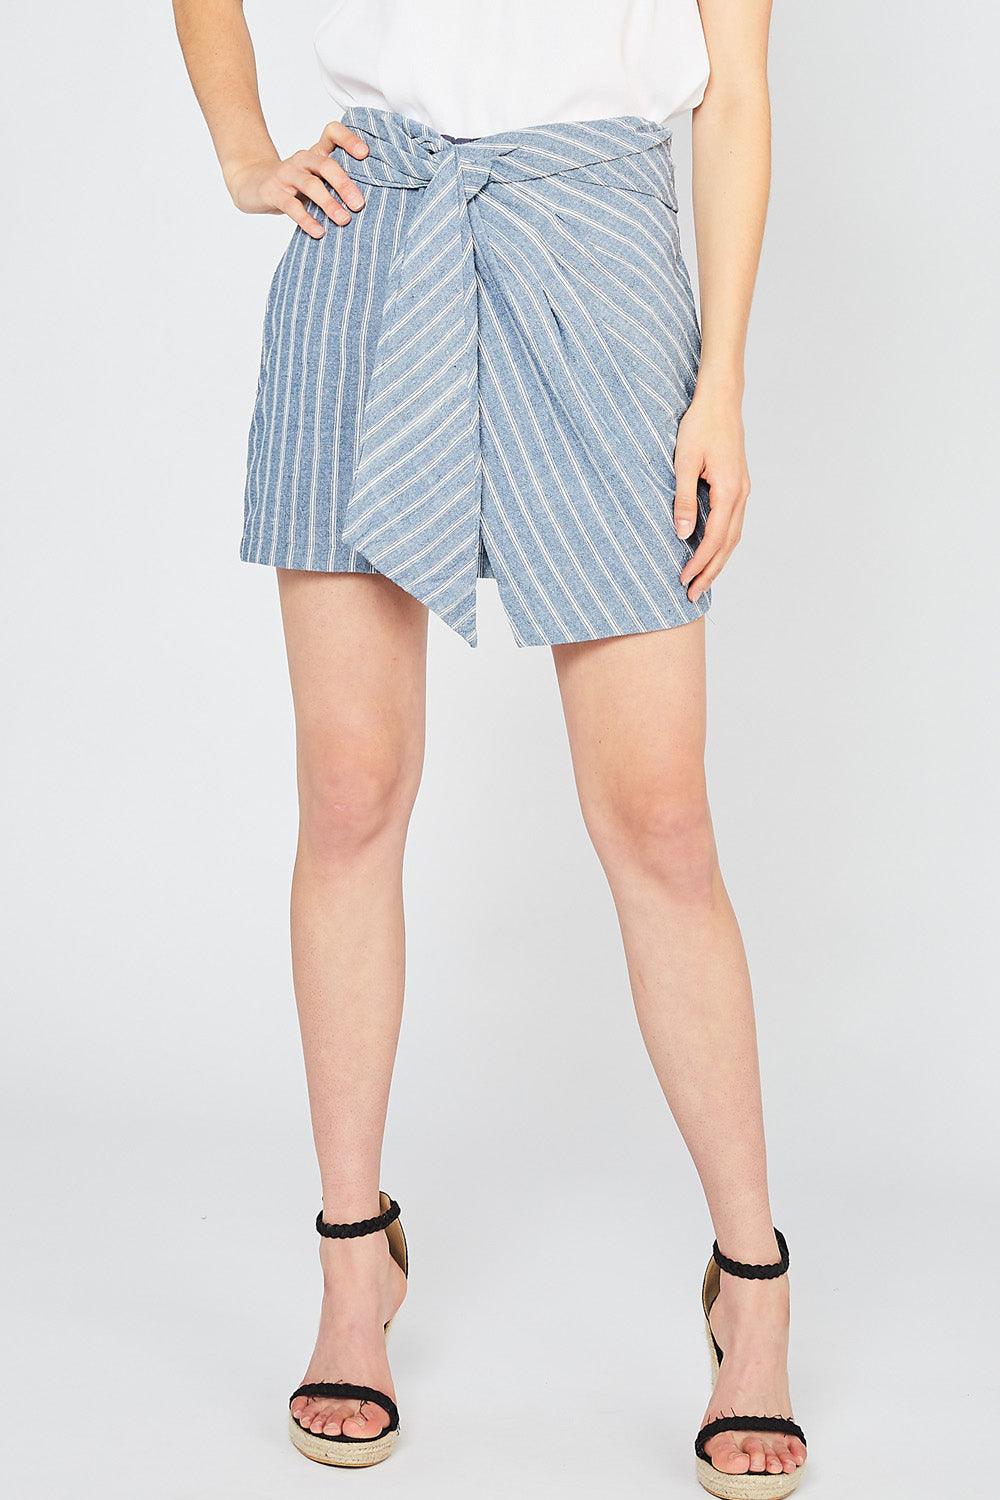 faux wrap pinstripe skirt-Skirts-Entro-Denim-S10286-4-RK Collections Boutique